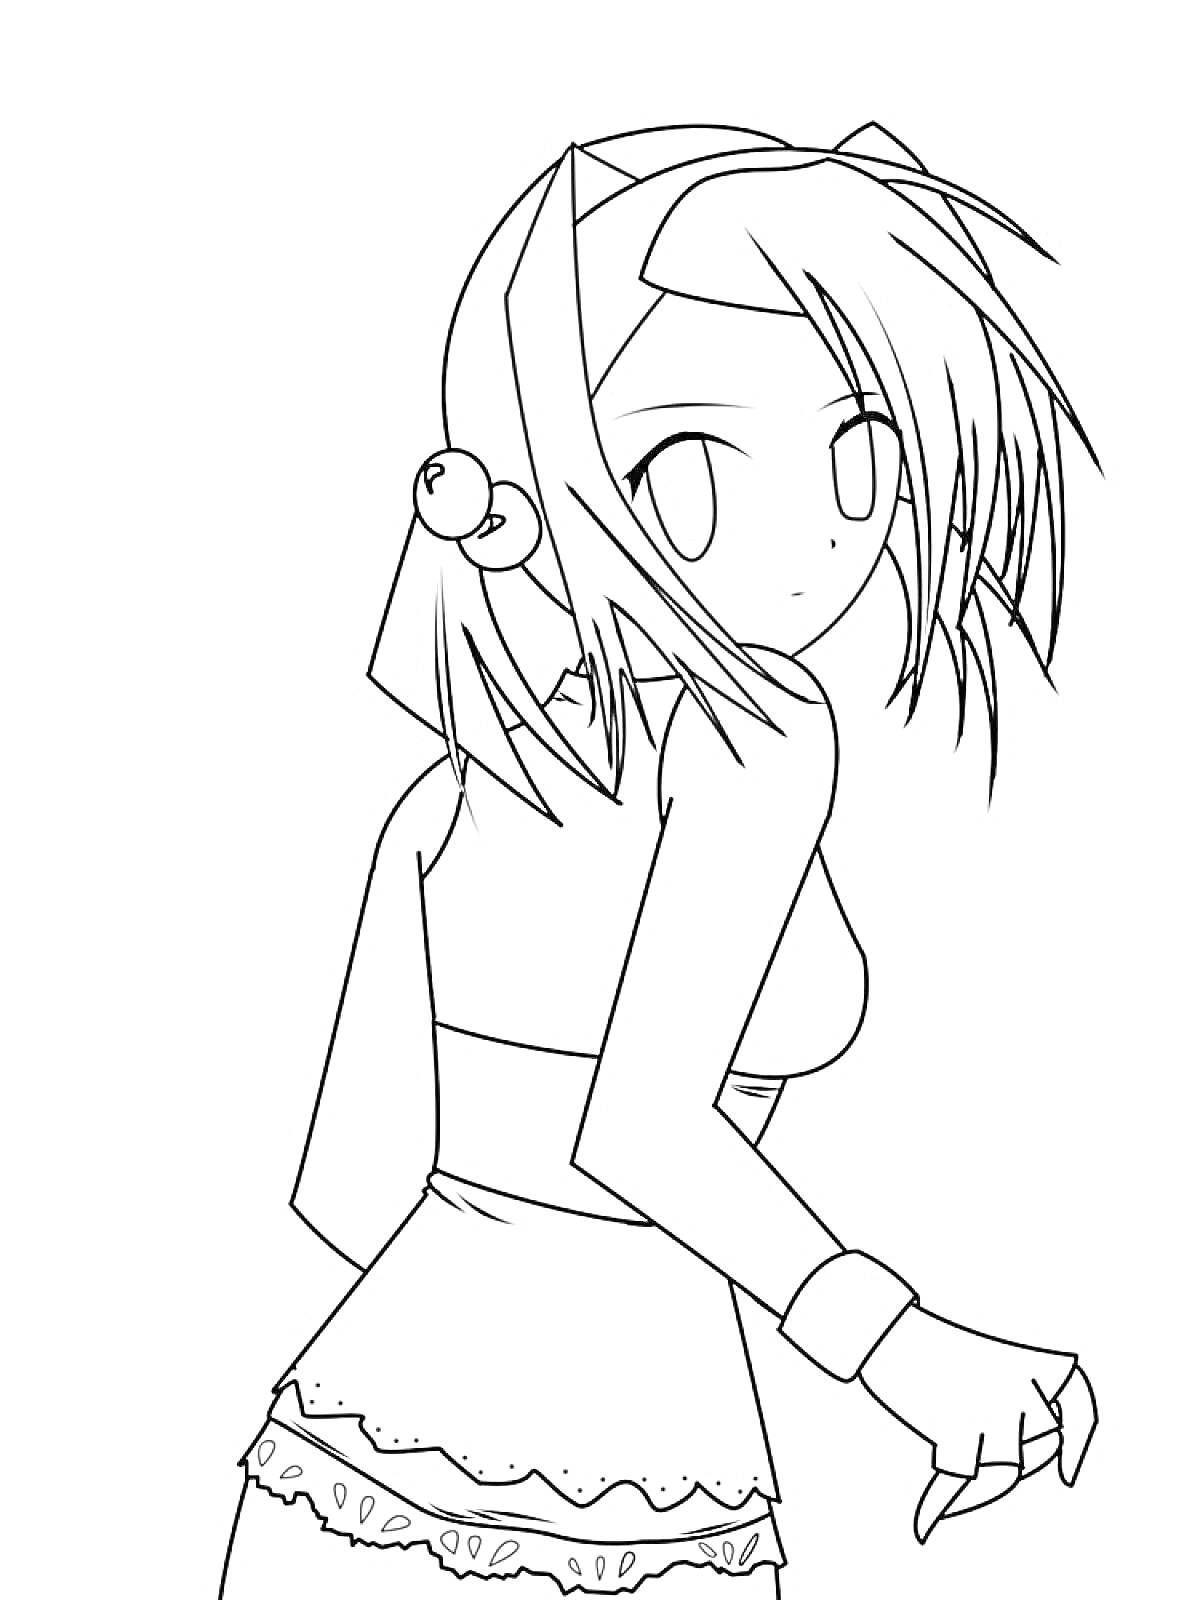 Девушка в аниме стиле с короткими волосами, резинкой на голове и в блузке с юбкой с кружевами.